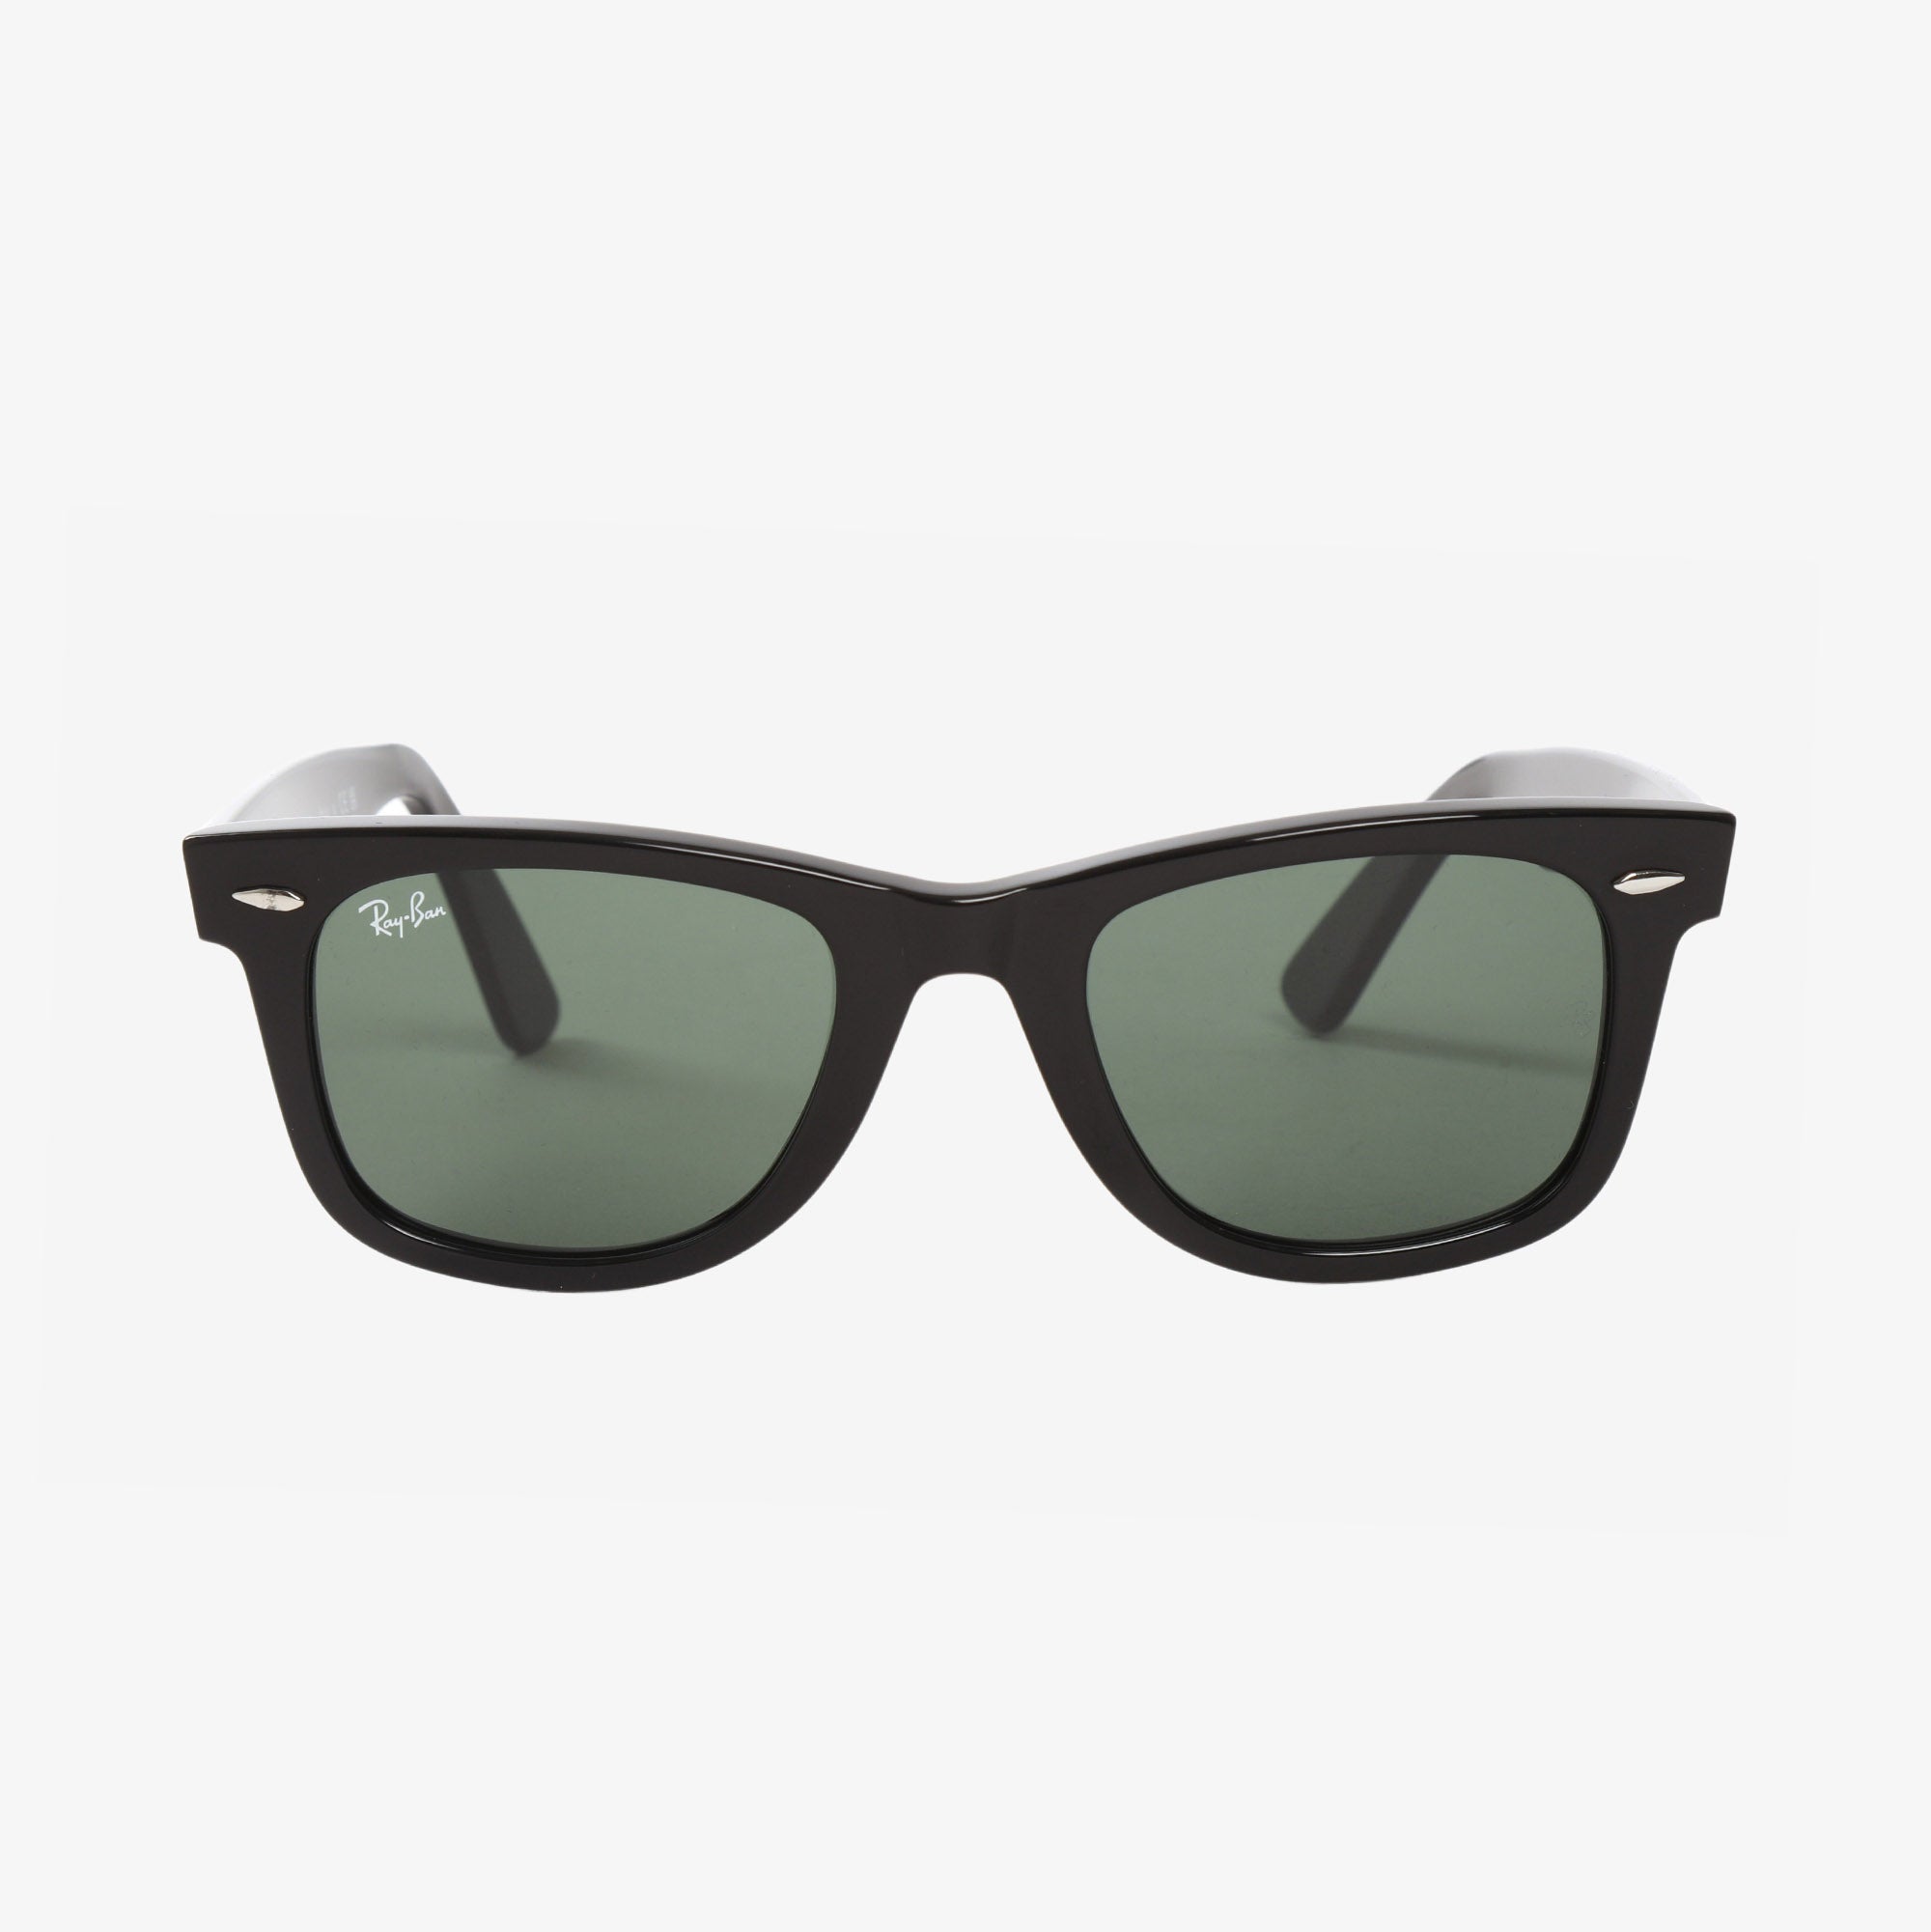 ORB2140 Wayfarer Classic Sunglasses